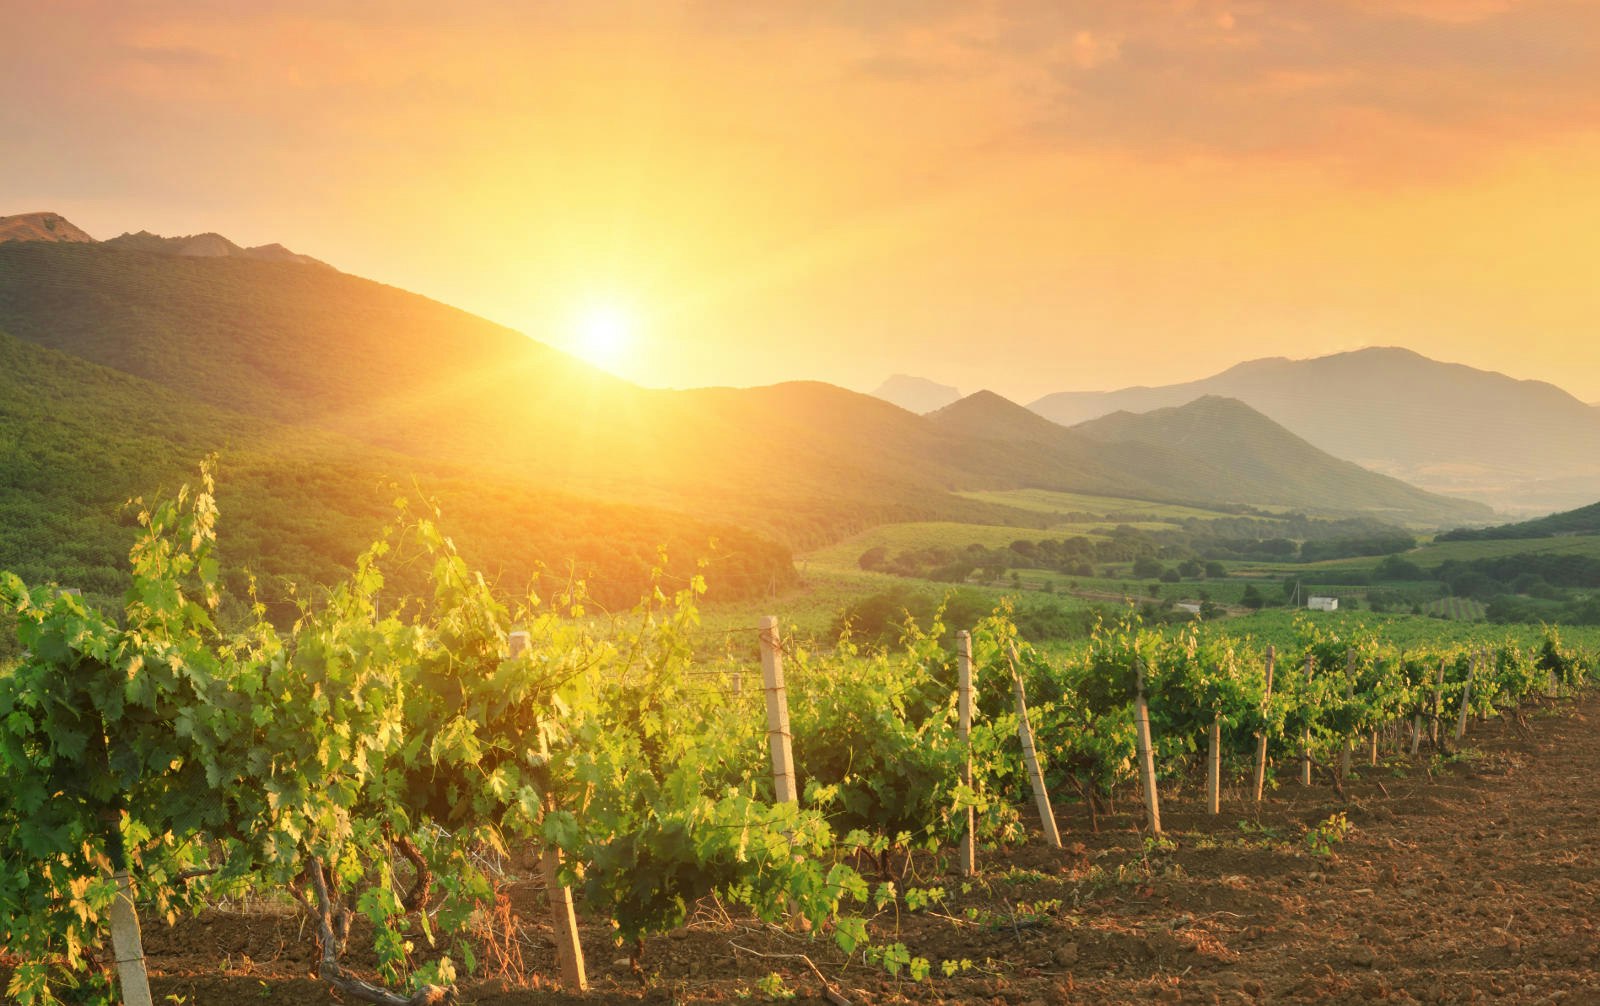 Sun shining over mountains and a vineyard in Lebanon © Anton Petrus / Shutterstock